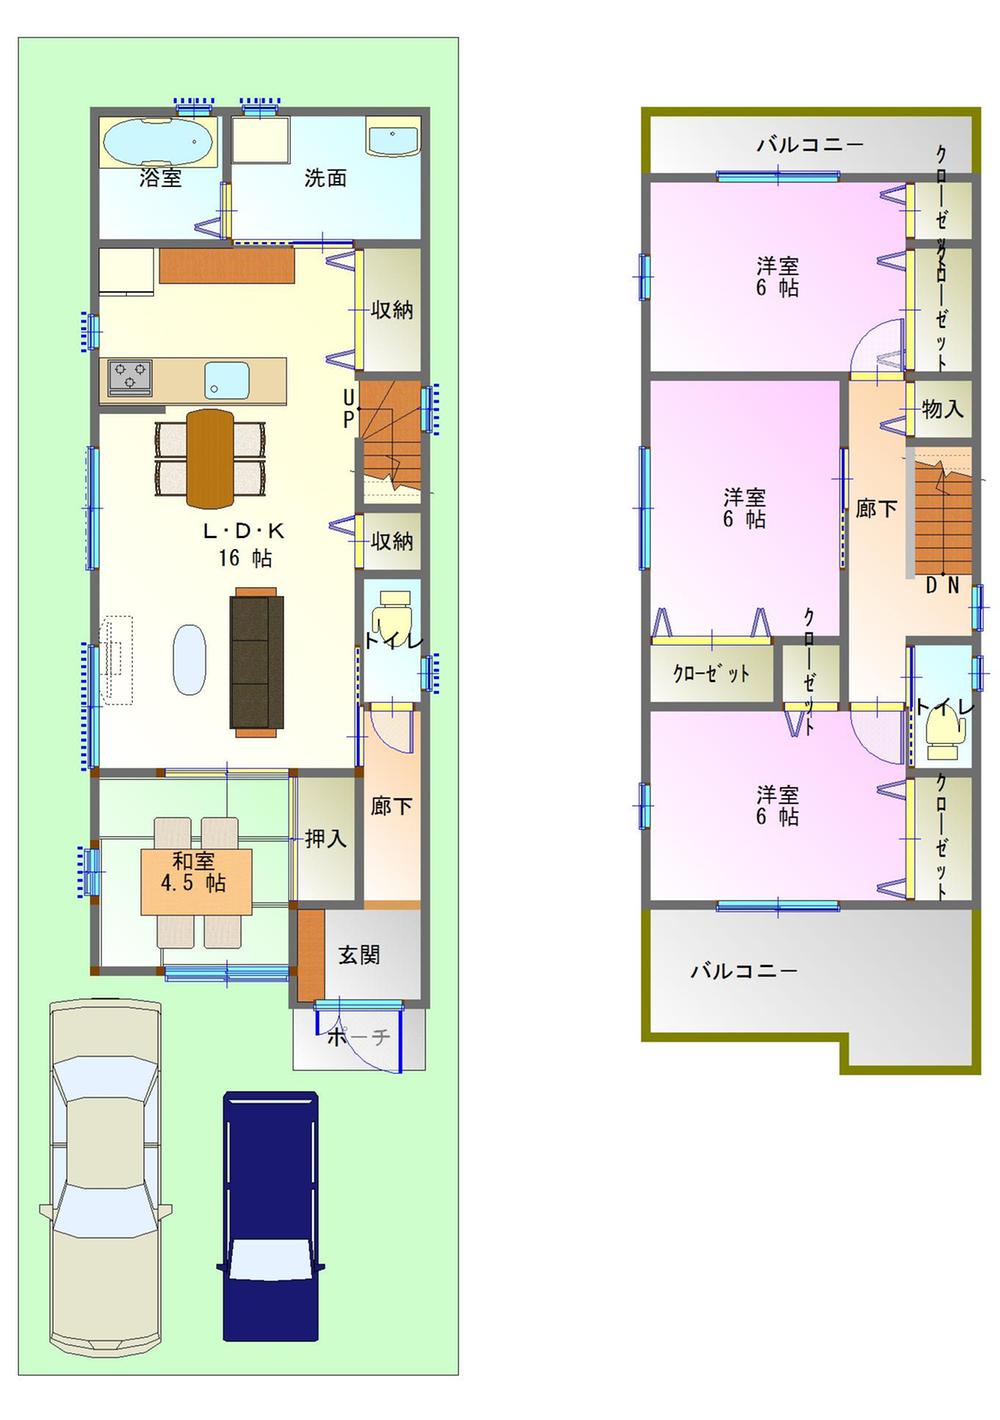 Building plan example (floor plan). Building plan example (No. 4 place) 4LDK, Land price 20,050,000 yen, Land area 109.15 sq m , Building price 15,750,000 yen, Building area 98.01 sq m